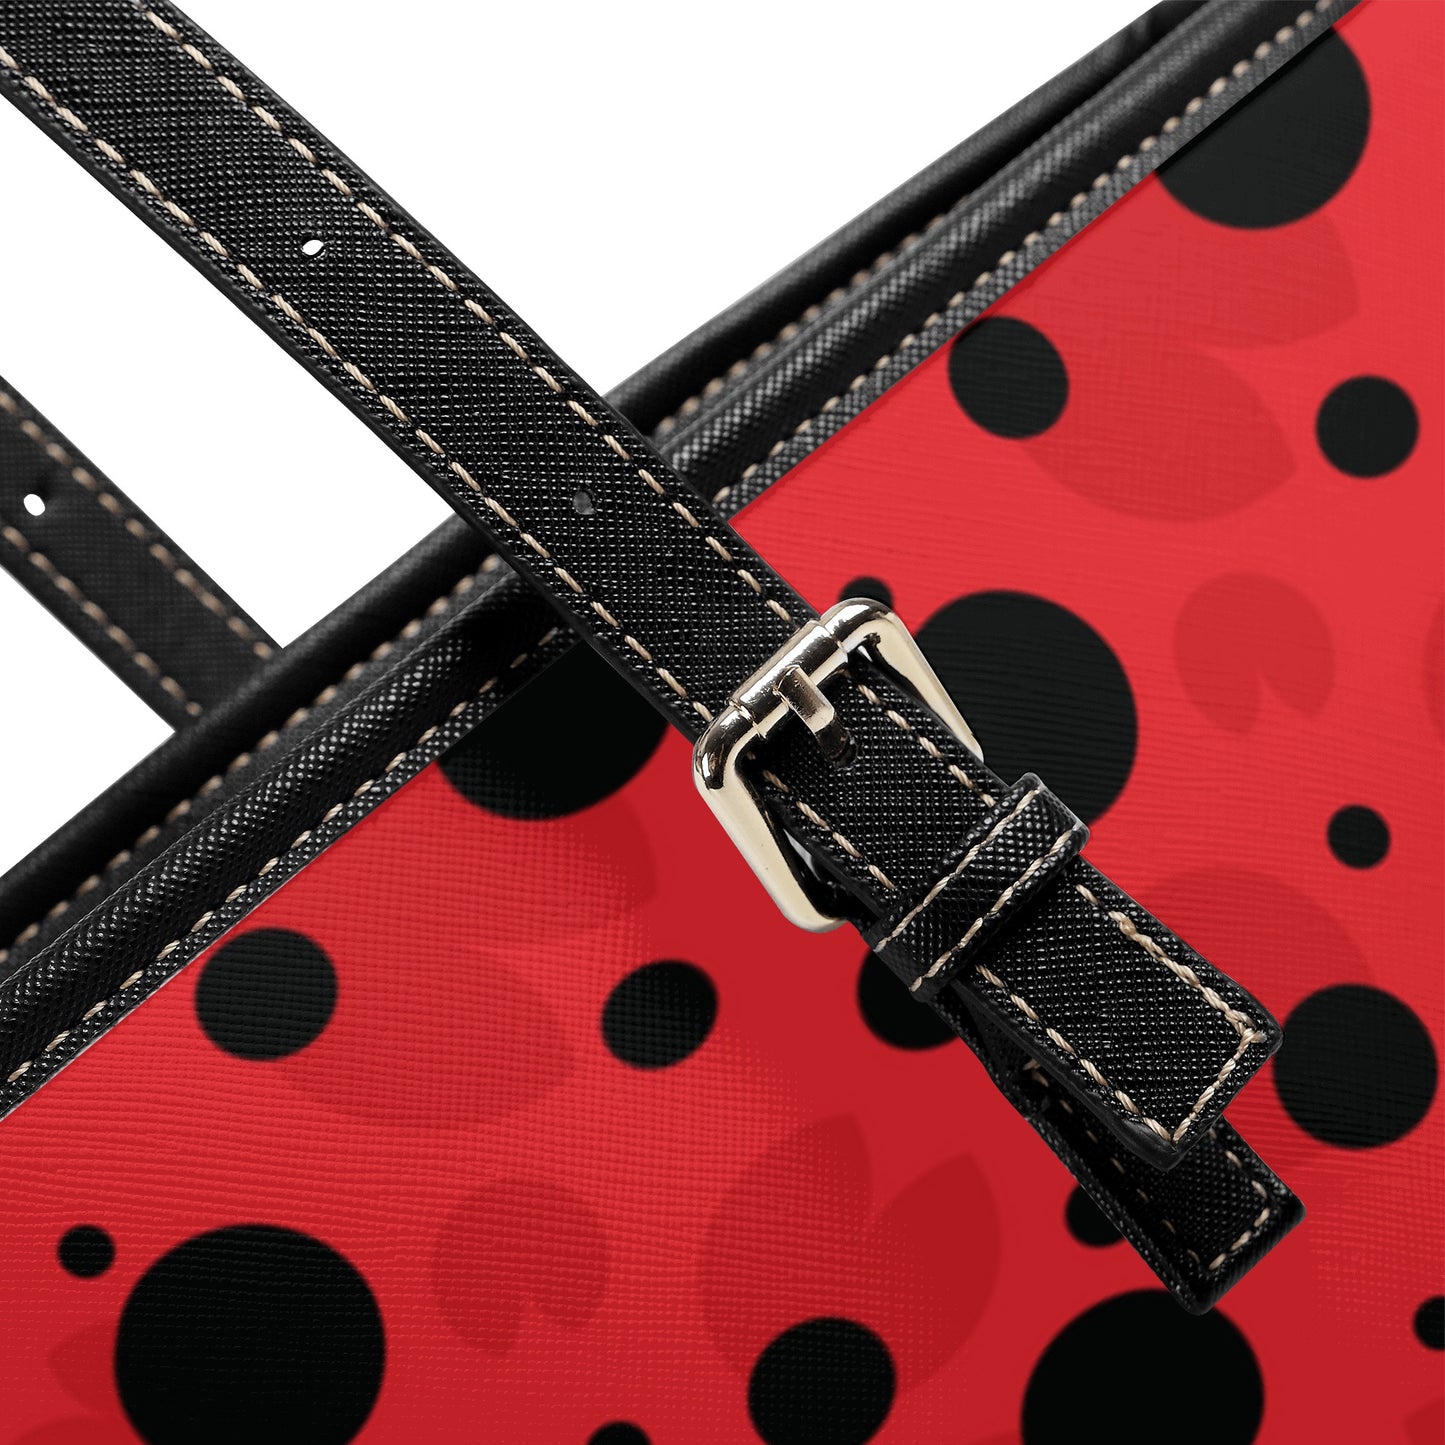 Ladybug Tote Bag Purse, Red Black Dots Vegan Leather Print Handbag Women Zip Top Small Large Designer Handmade Shoulder